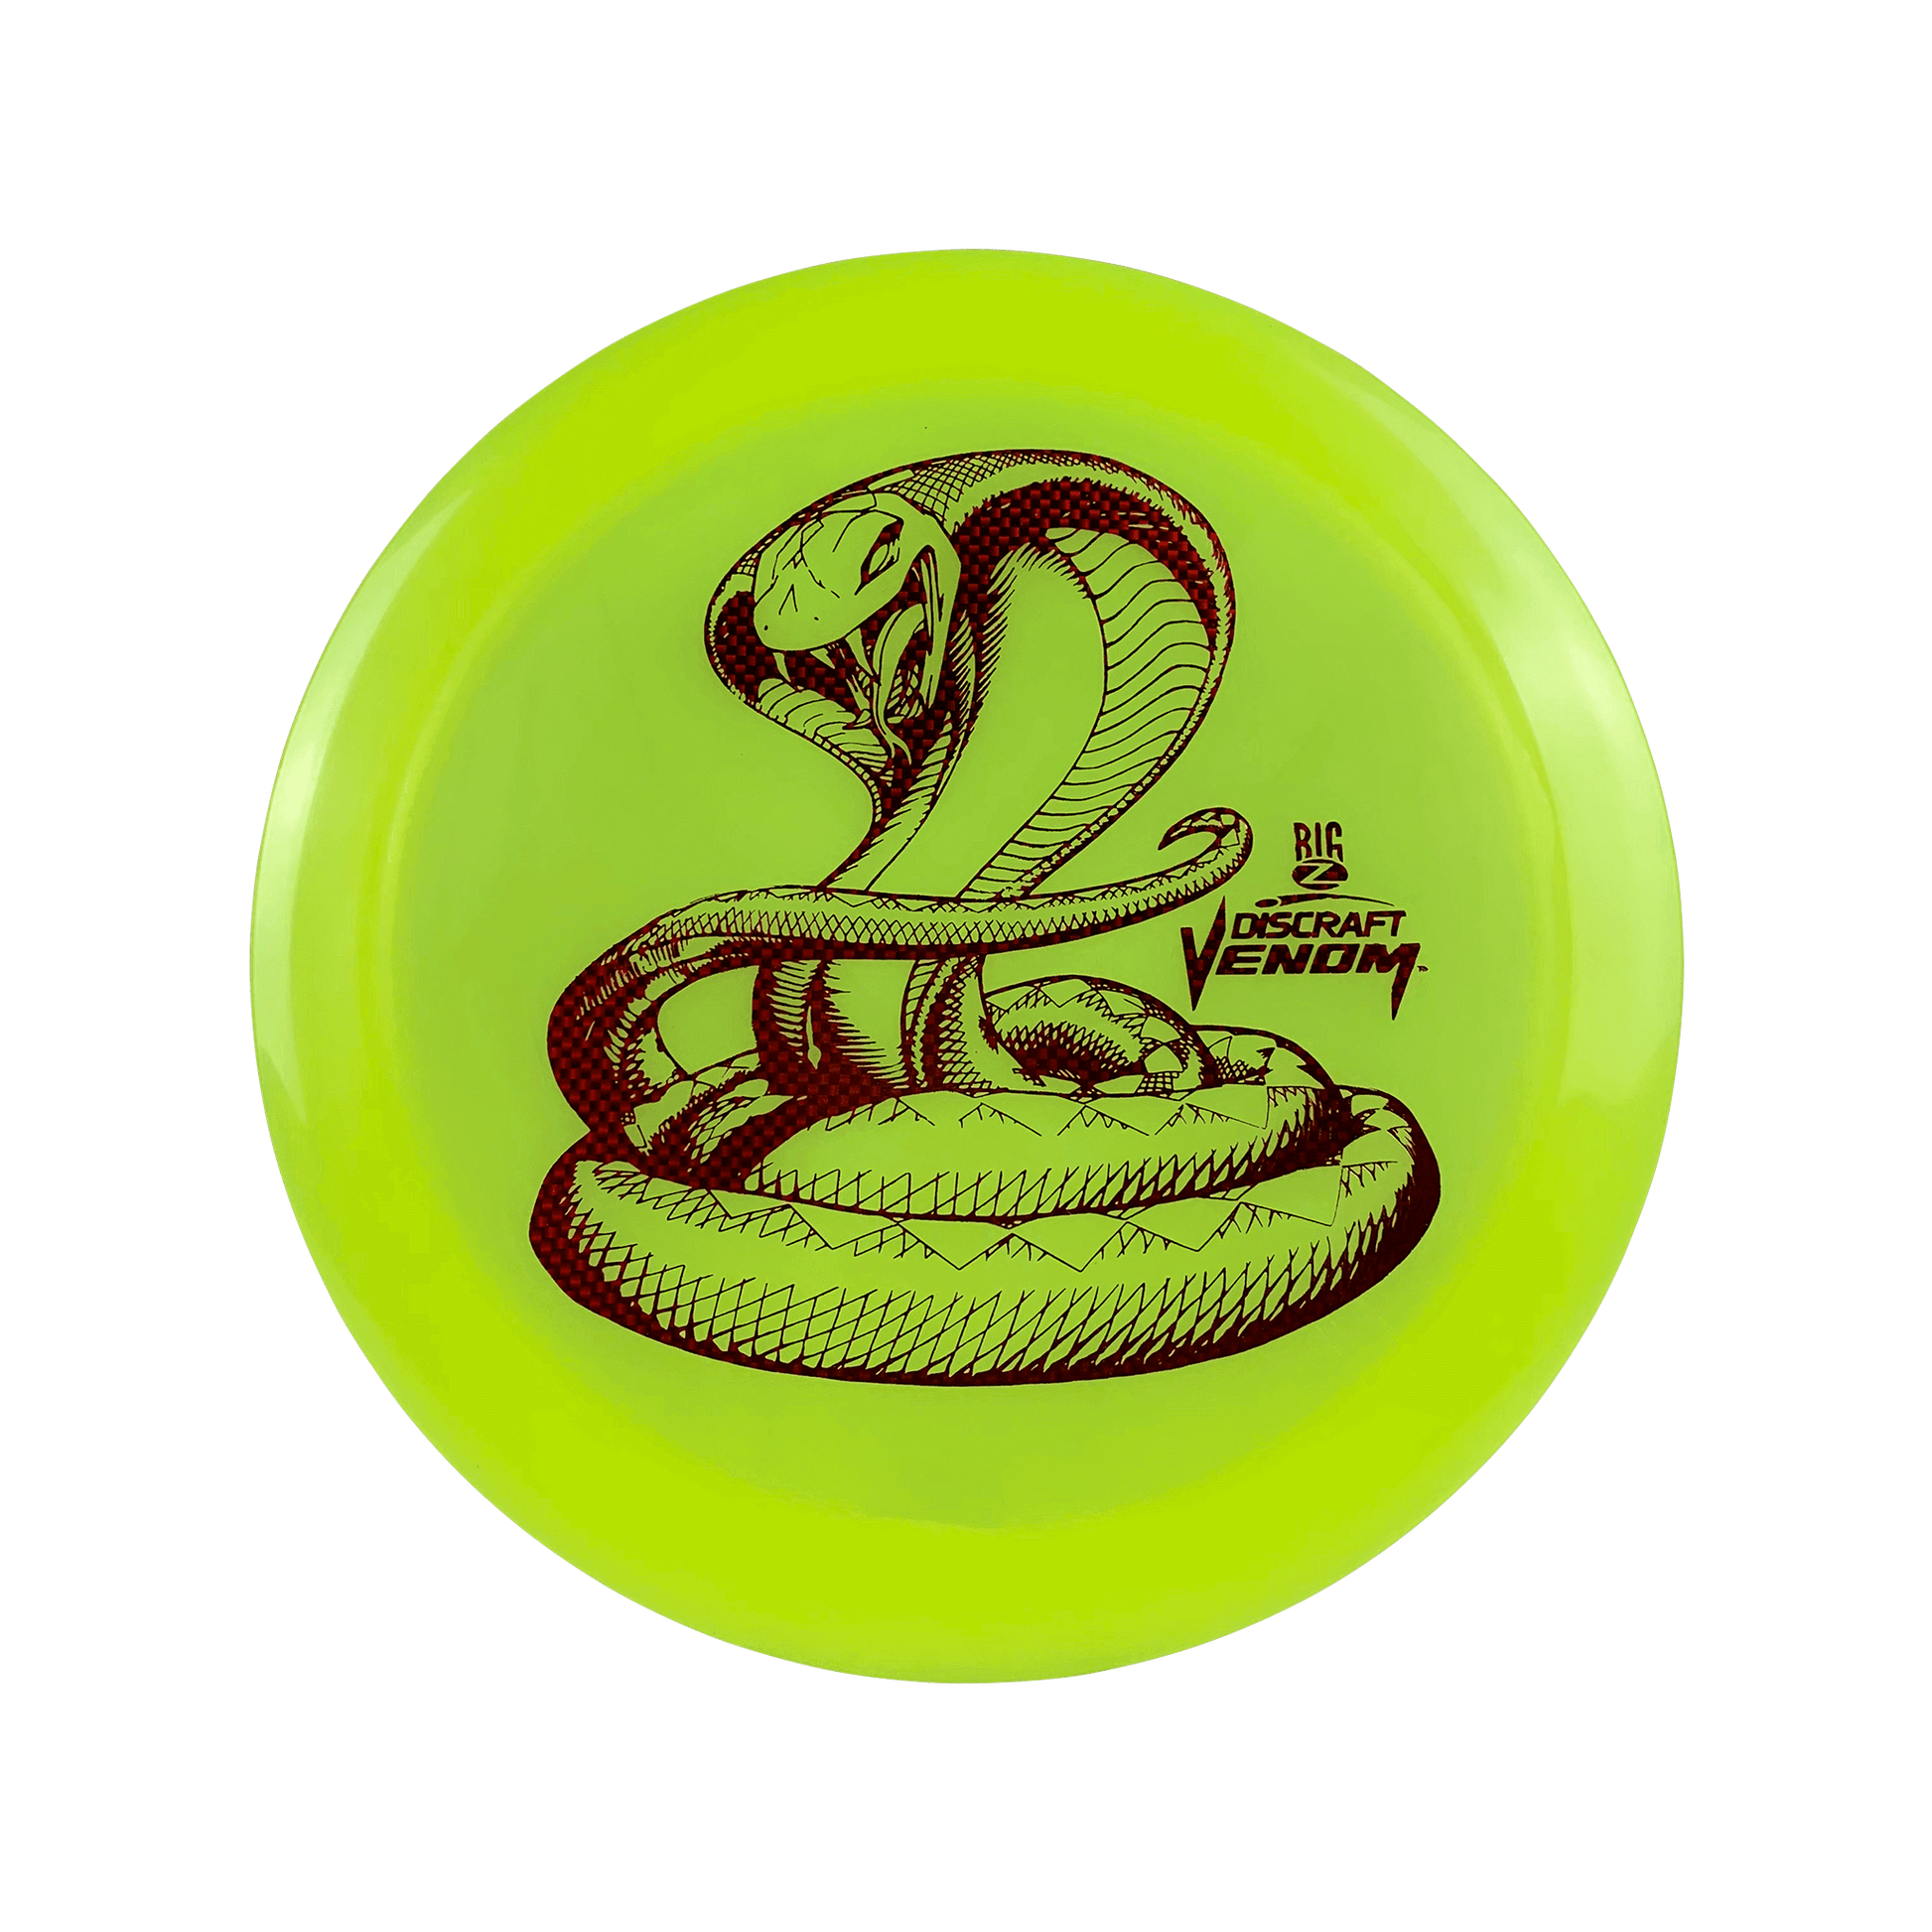 Big Z Venom Disc Discraft highlighter yellow 173 